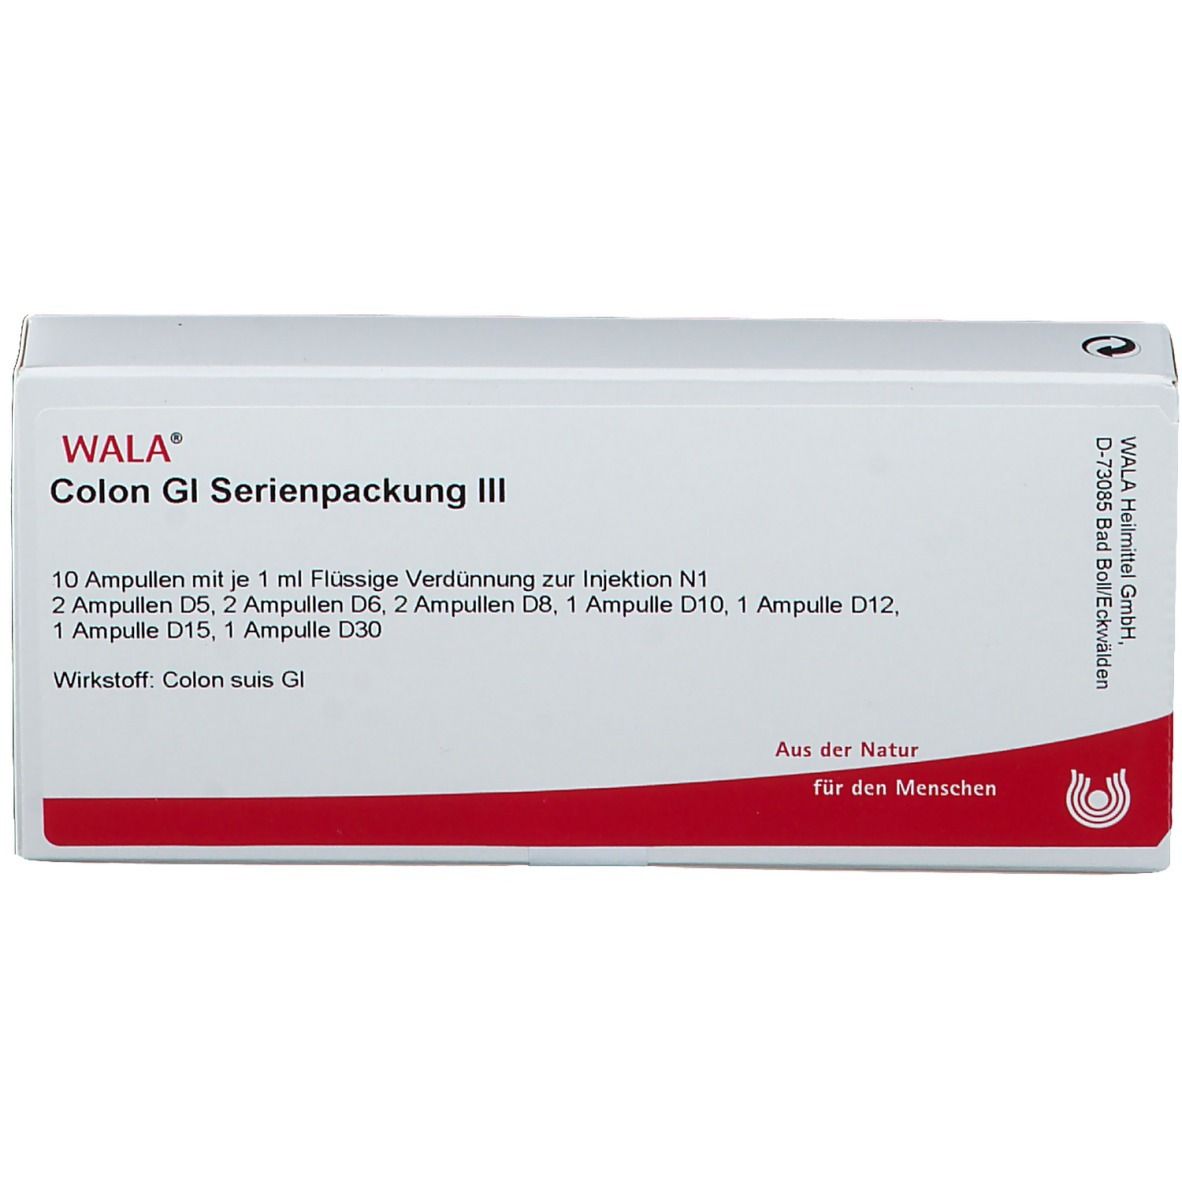 WALA® Colon Gl Serienpackung 3 Ampullen